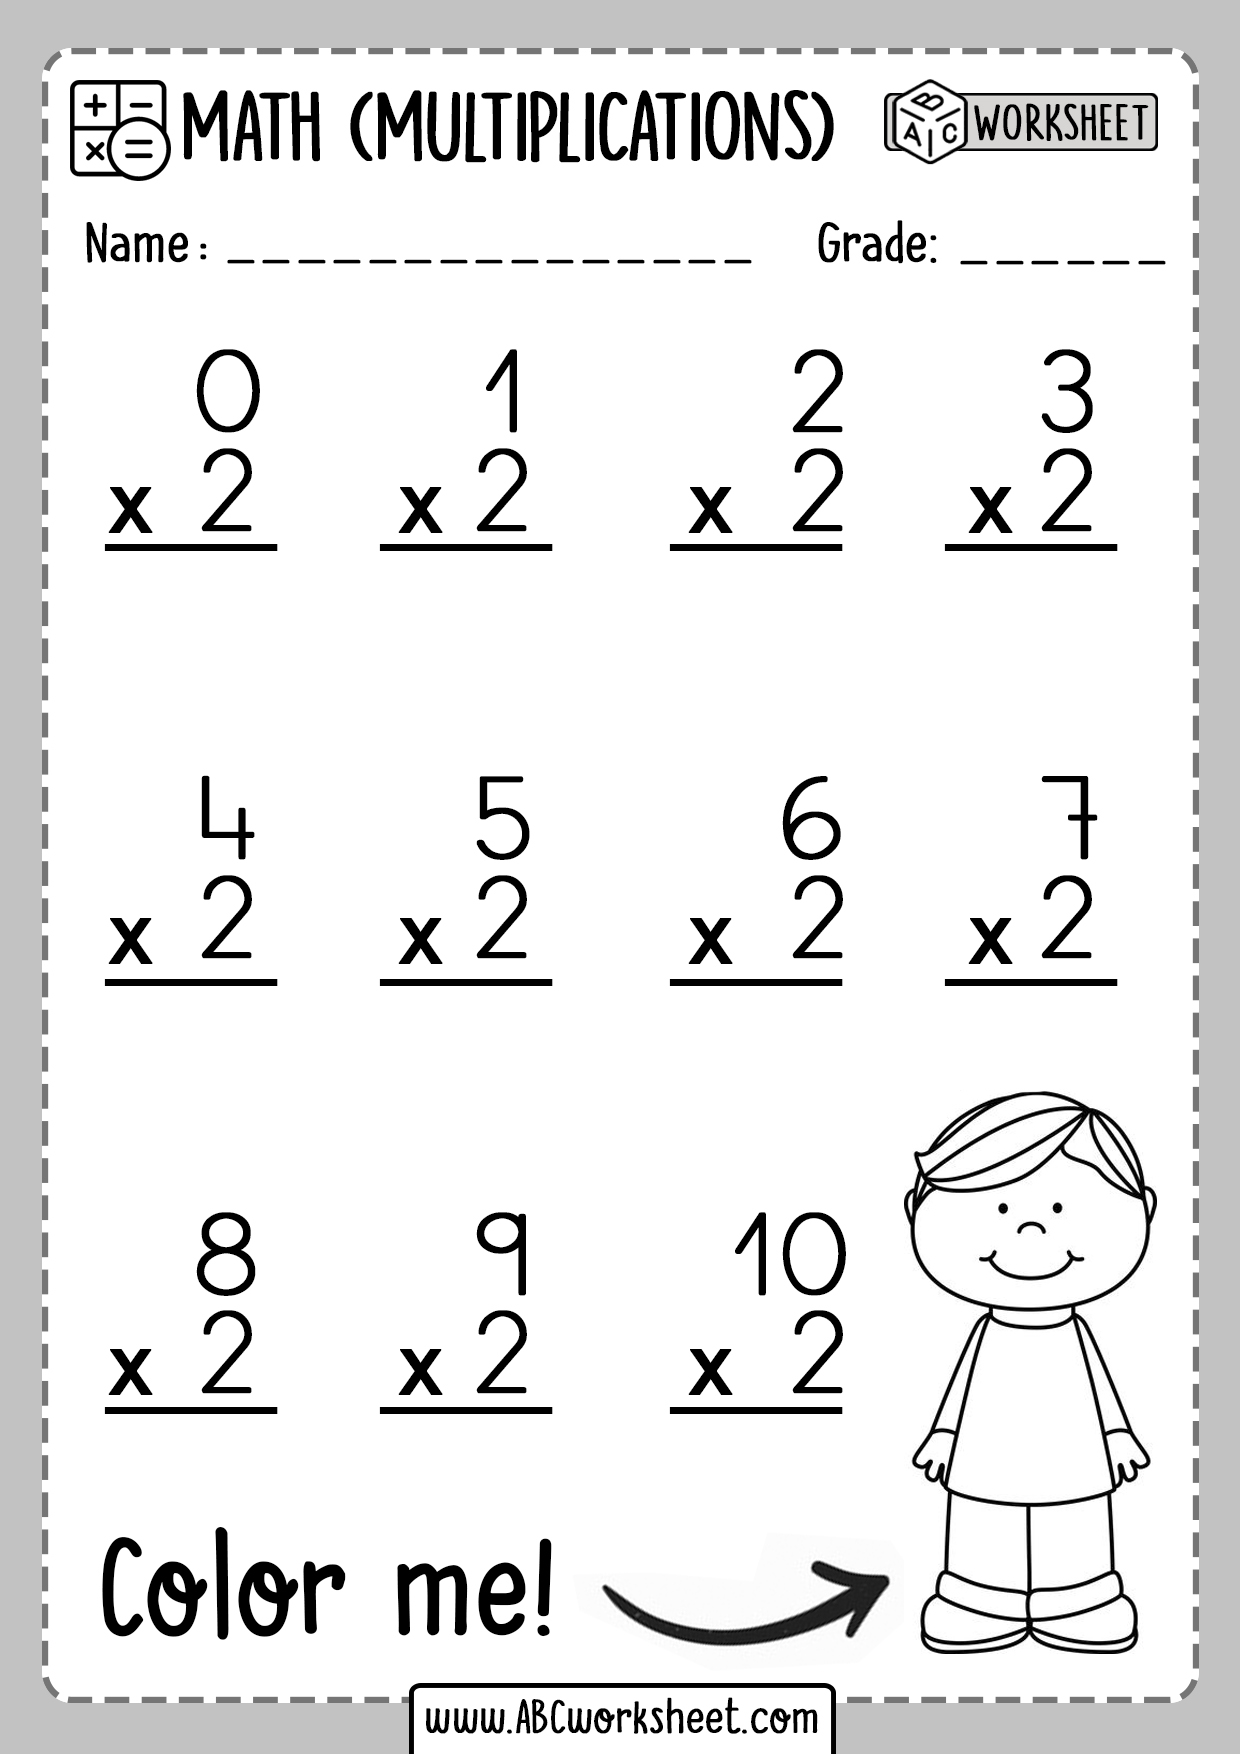 multiplication-facts-sheet-printable